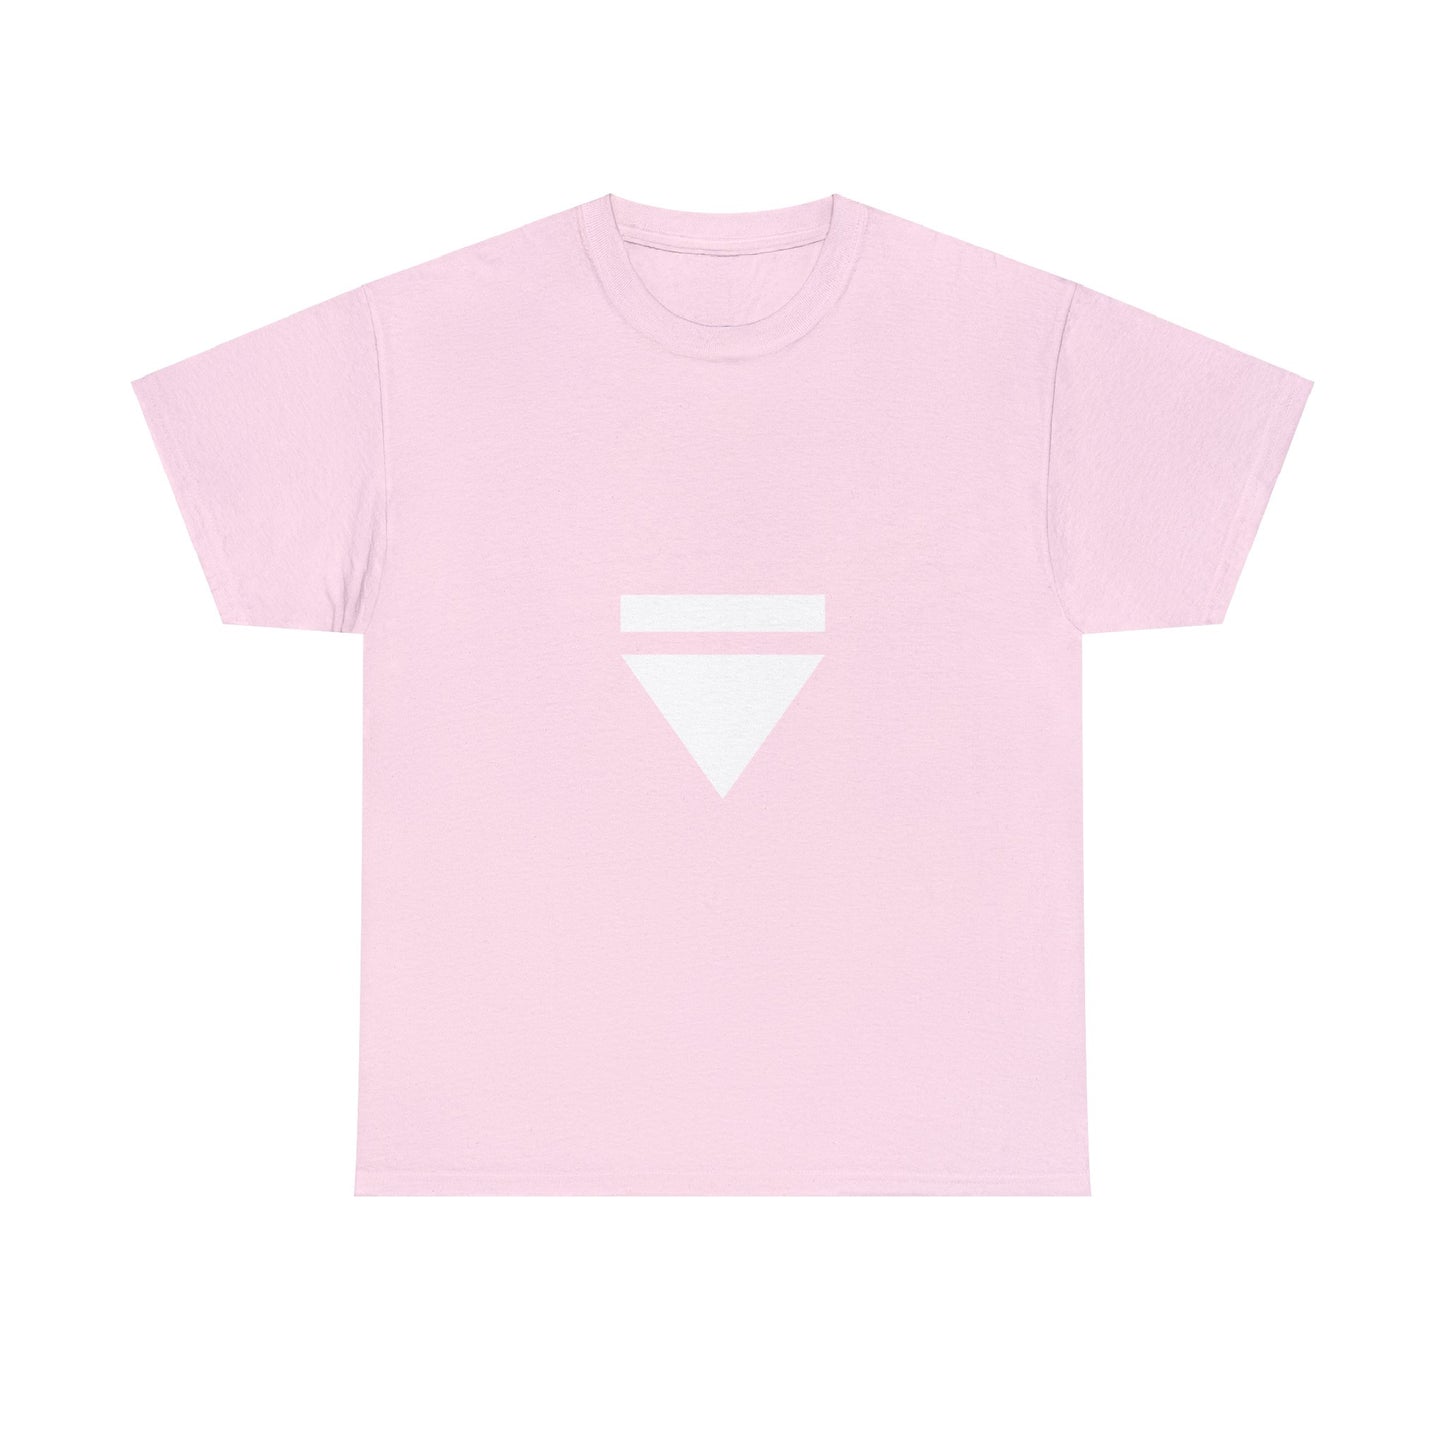 Newer Symbols Tom Vek UK pink T-shirt